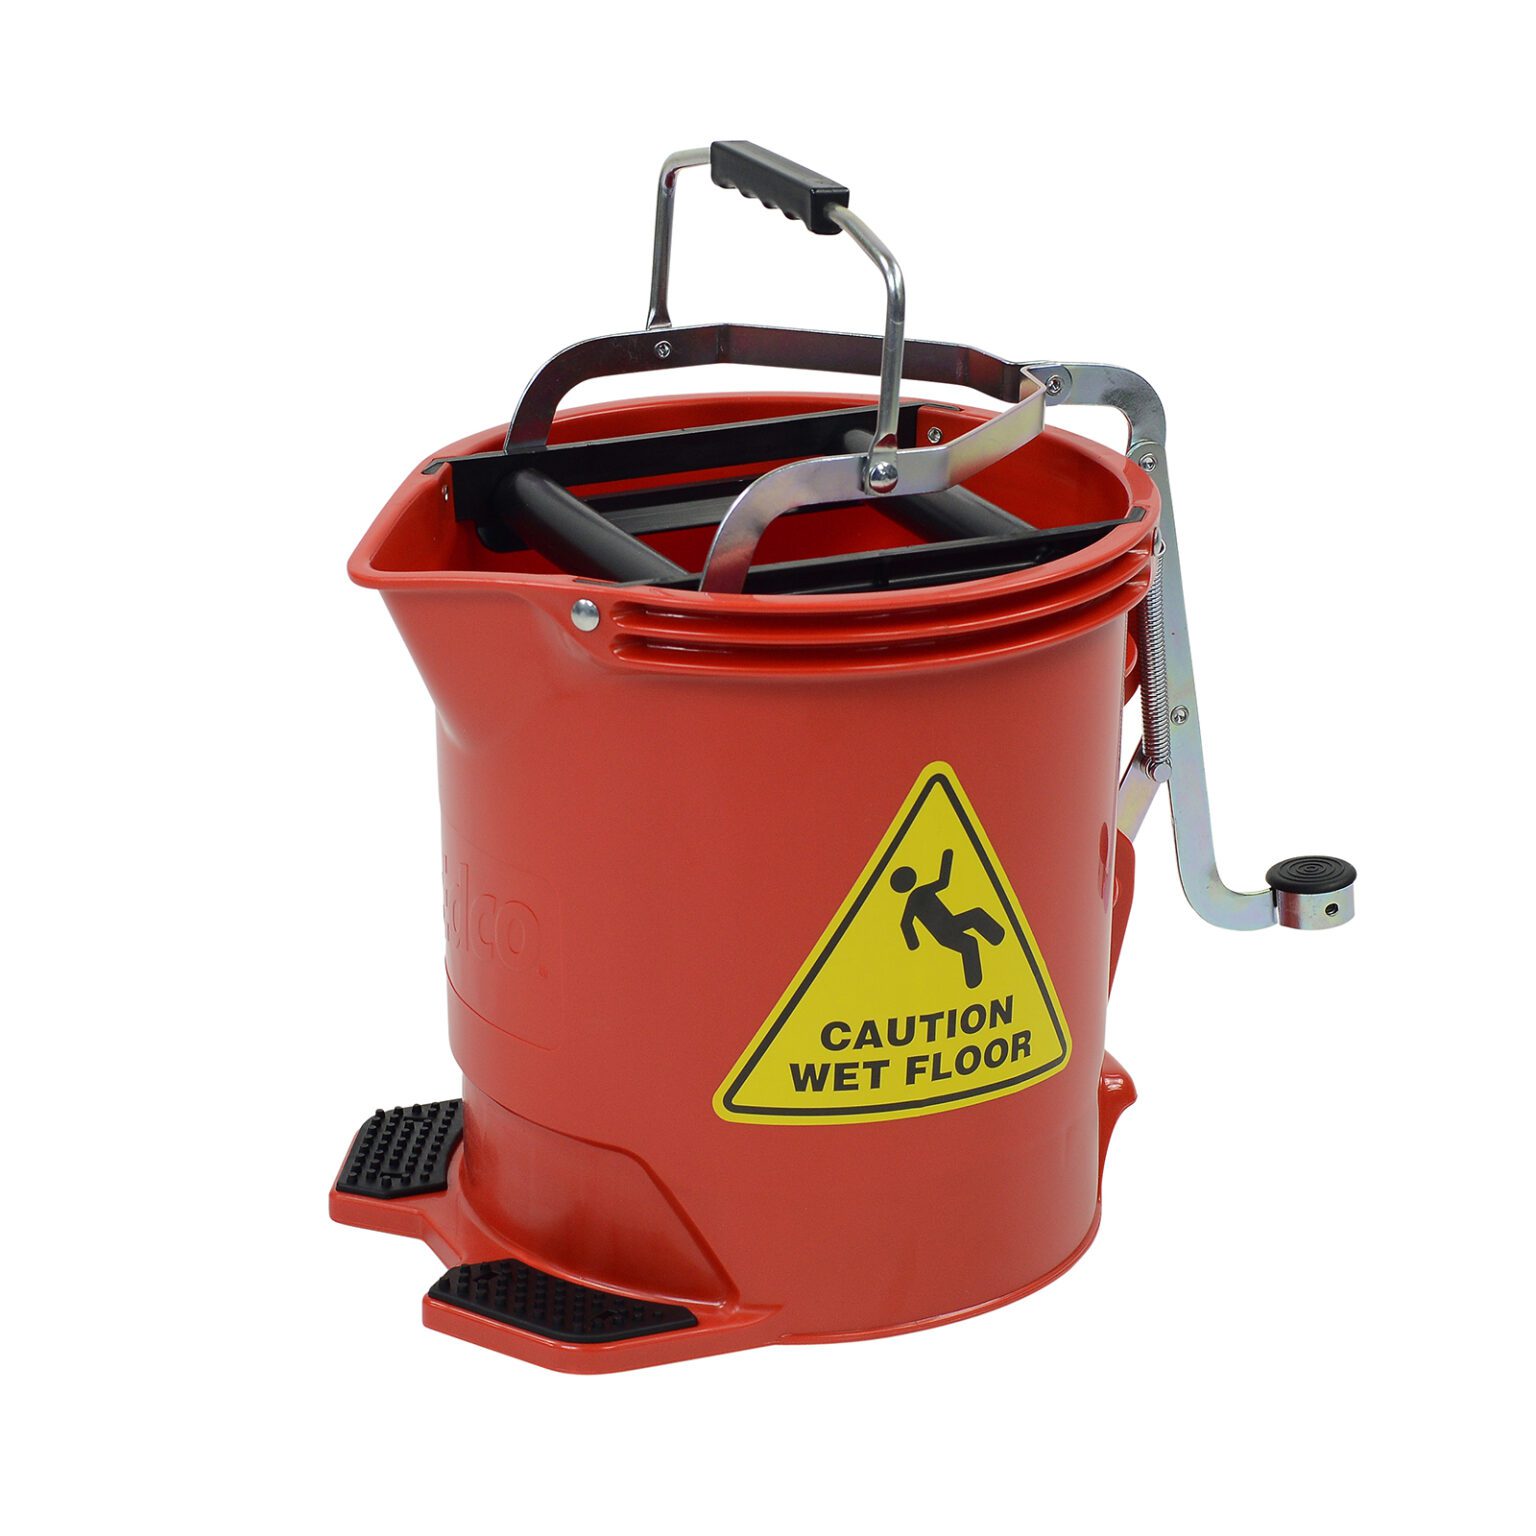 28570-Edco-15L-Metal-Wringer-Bucket-Red